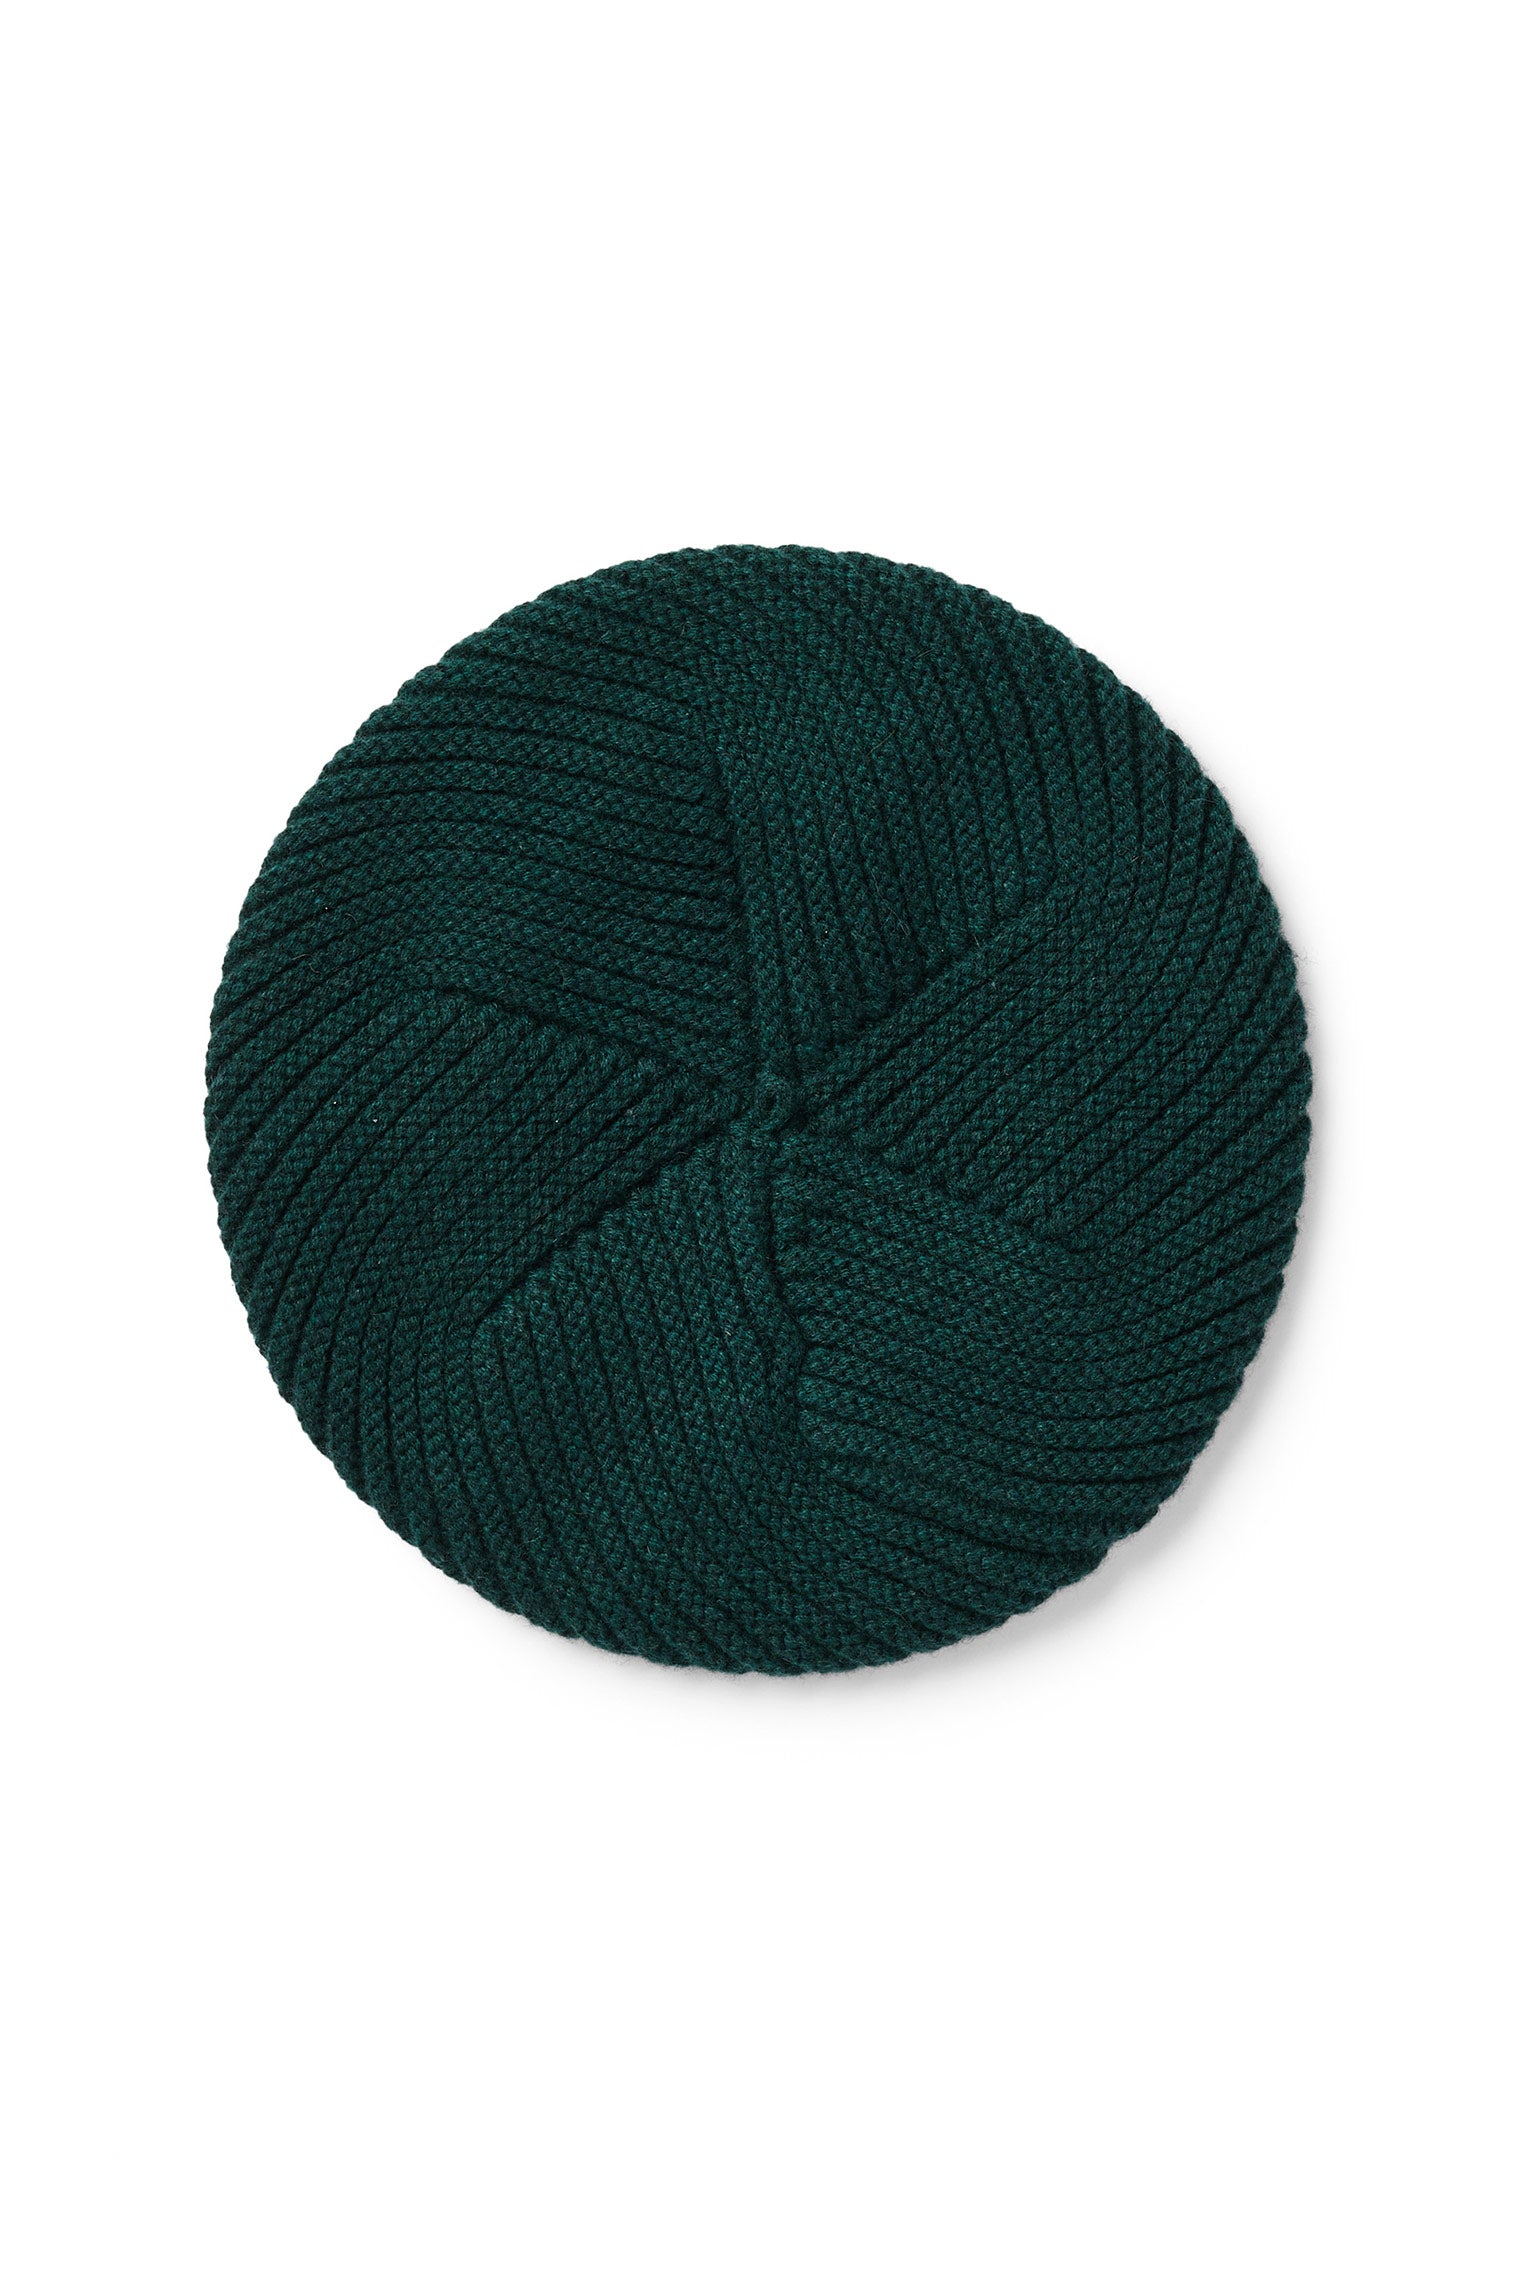 Green Knitted Cashmere Beret - New Season Women's Hats - Lock & Co. Hatters London UK